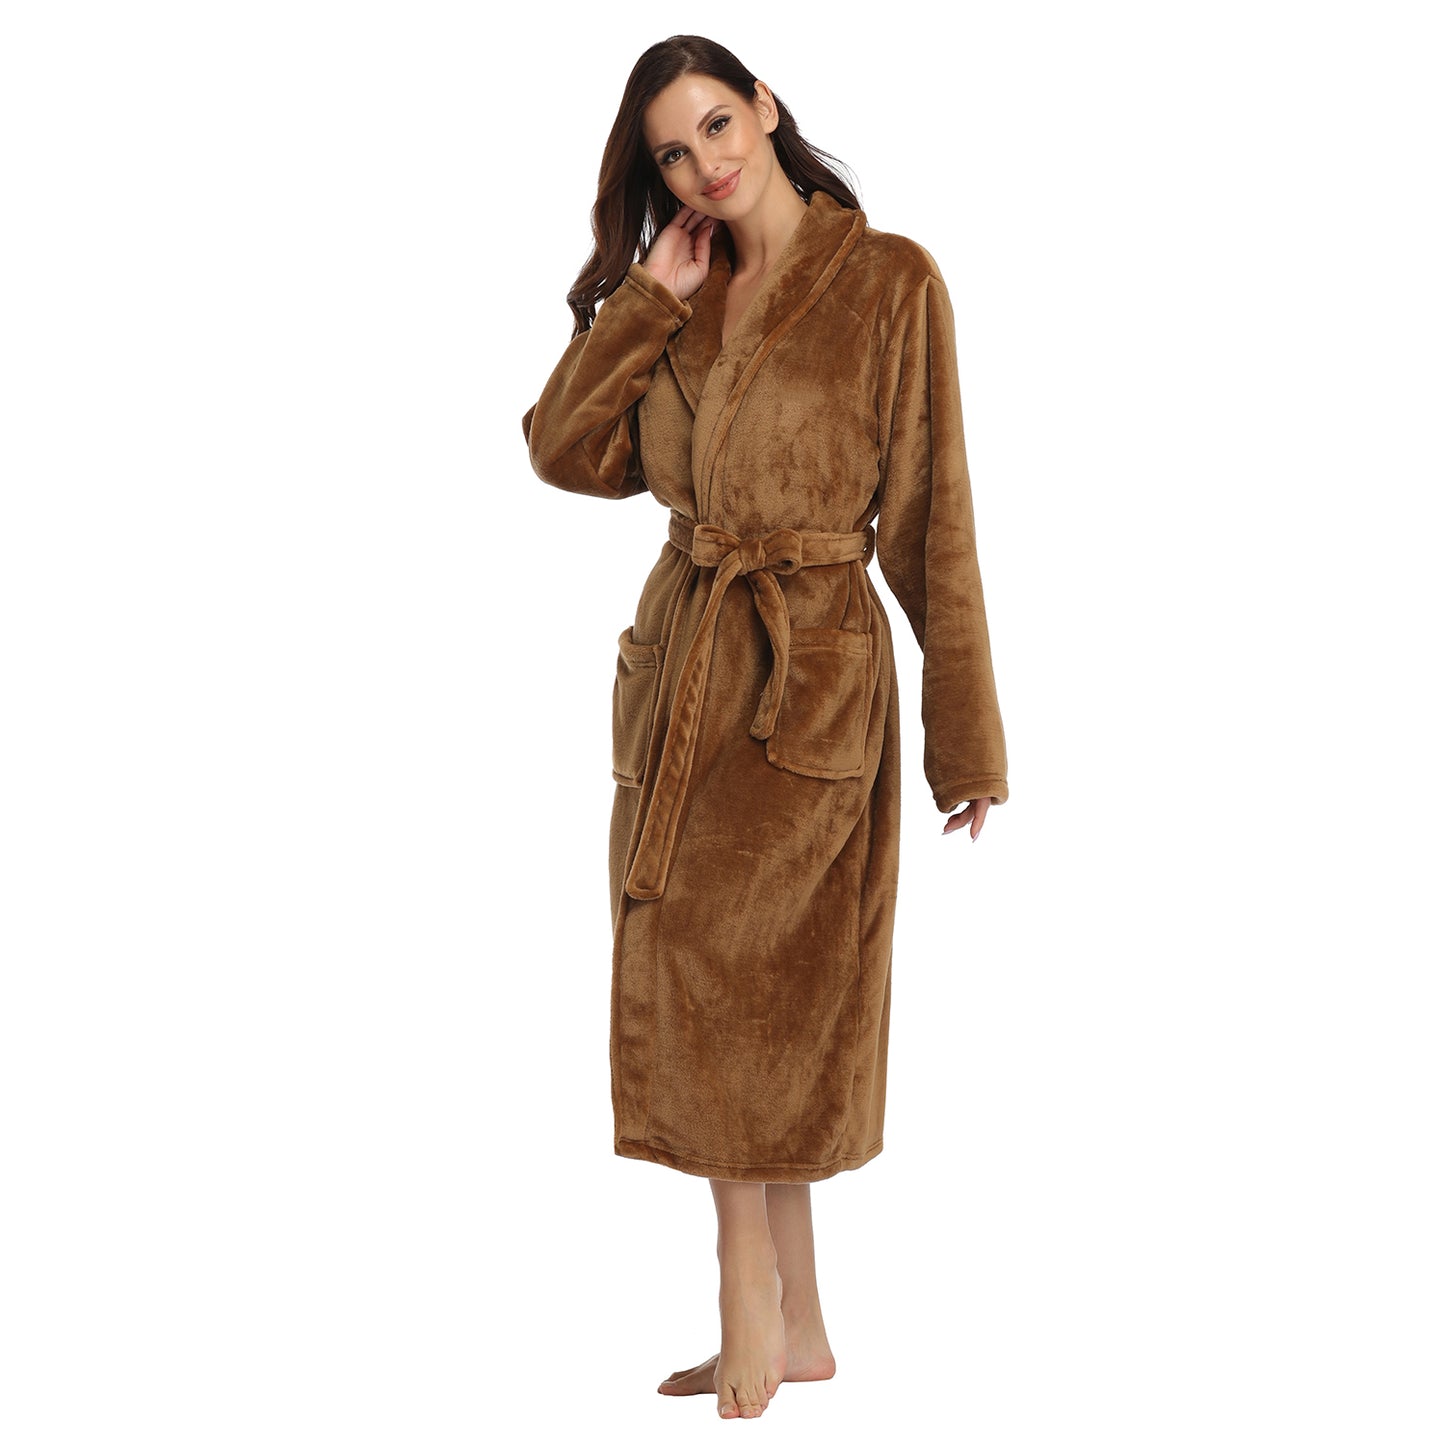 RONGTAI Brown Fleece Robes for Women Bathrobe with Pockets